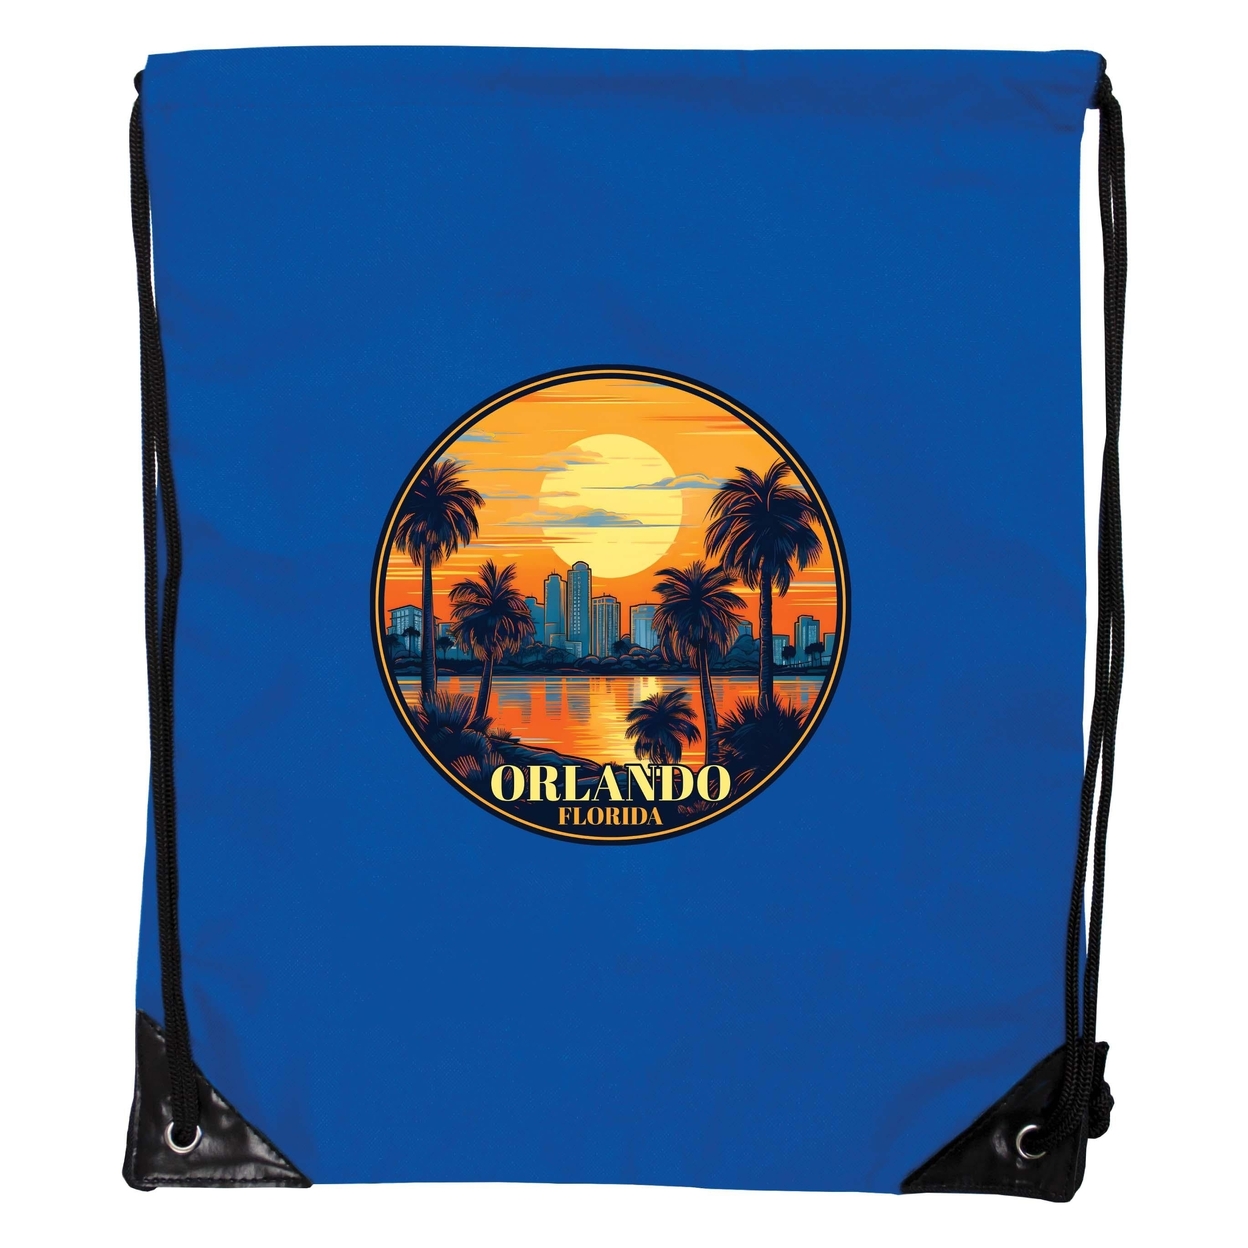 Orlando Florida B Souvenir Cinch Bag With Drawstring Backpack - Blue